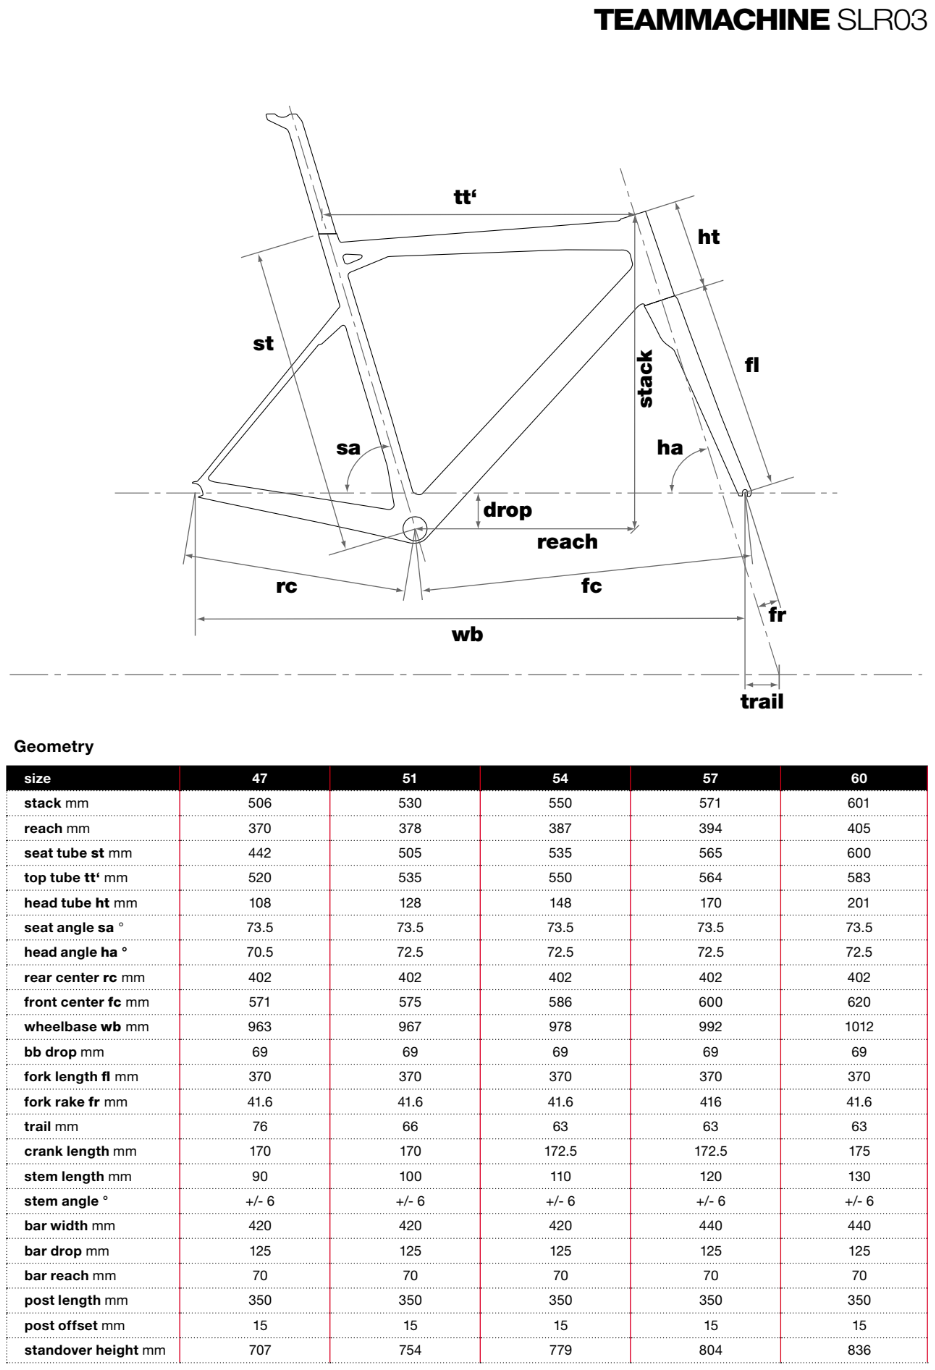 BMC Teammachine SLR03 geometry chart